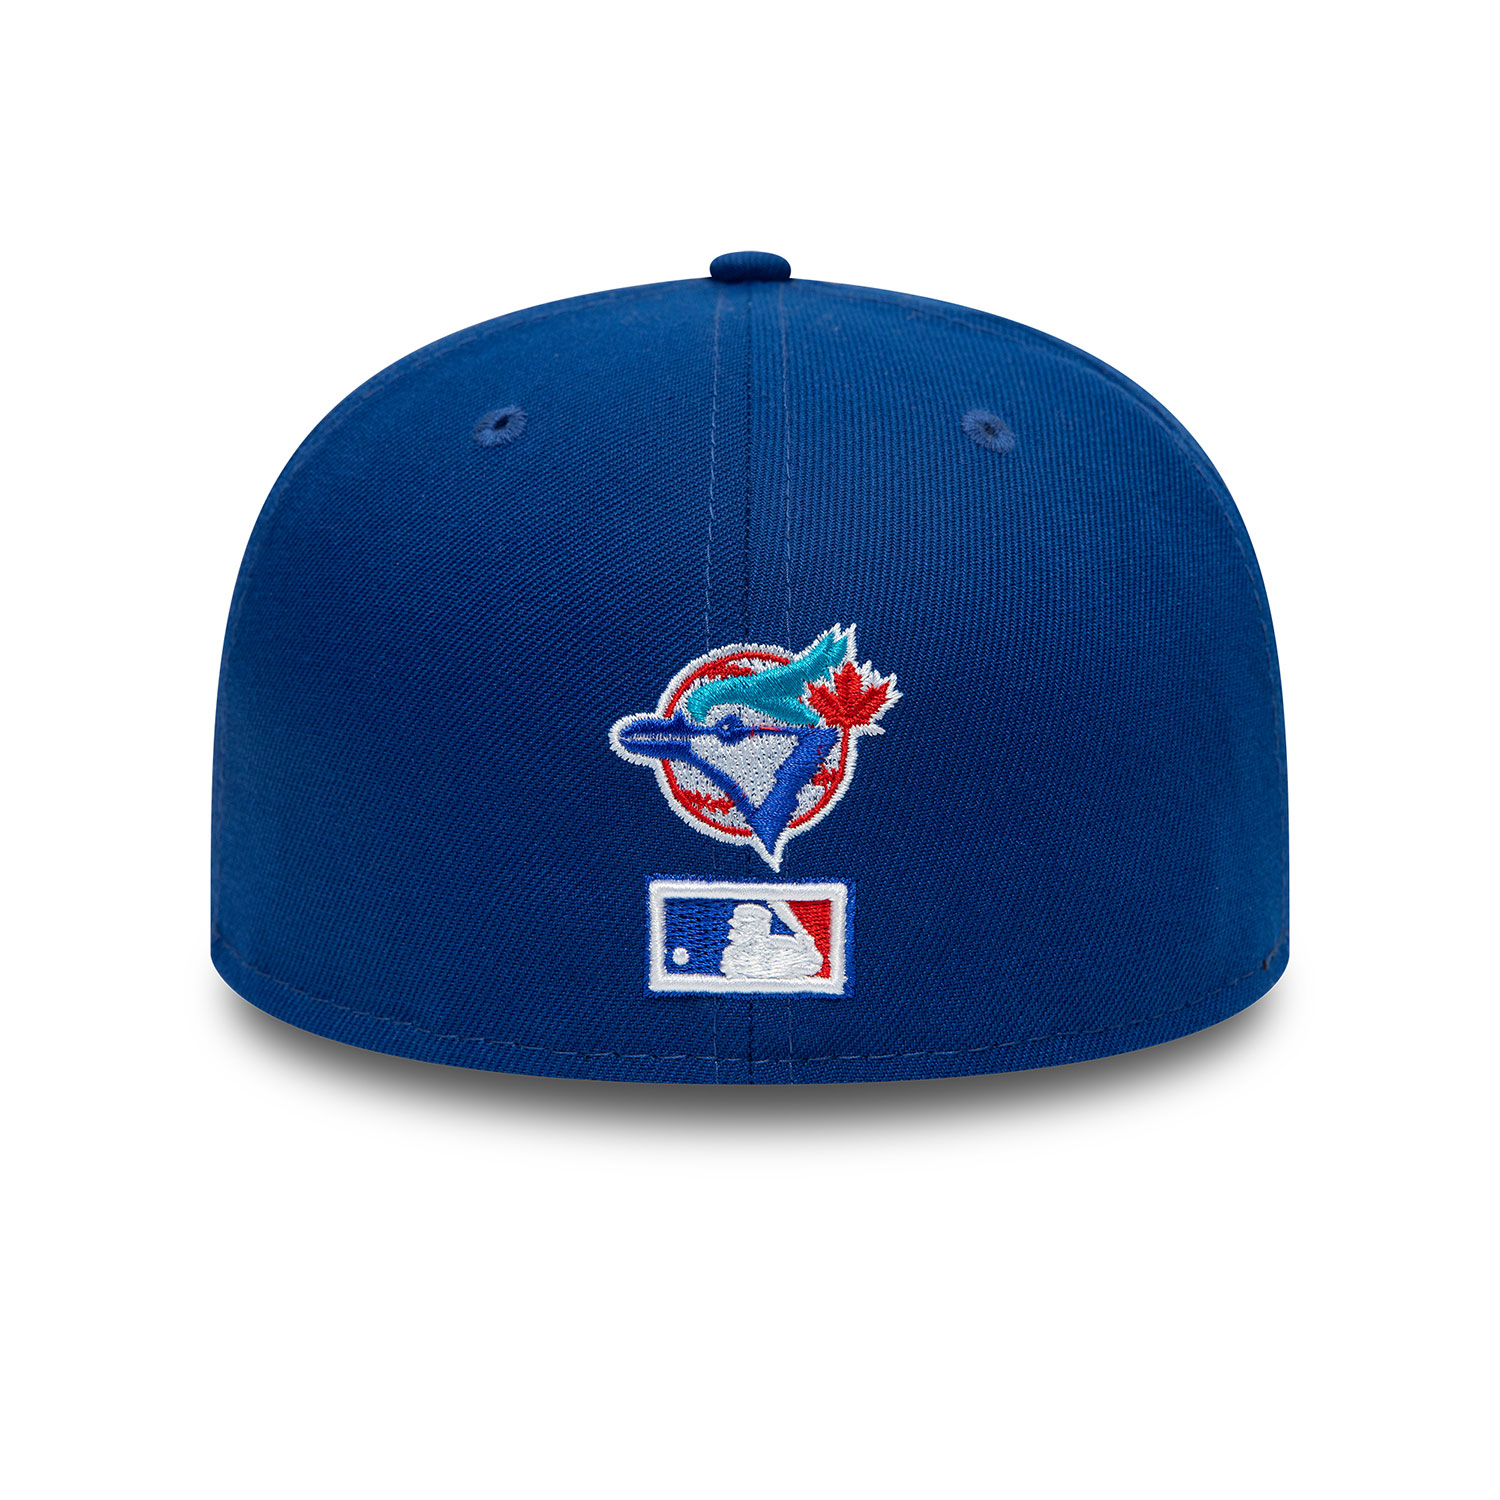 Official New Era Toronto Blue Jays MLB Dual Logo Bright Royal Blue